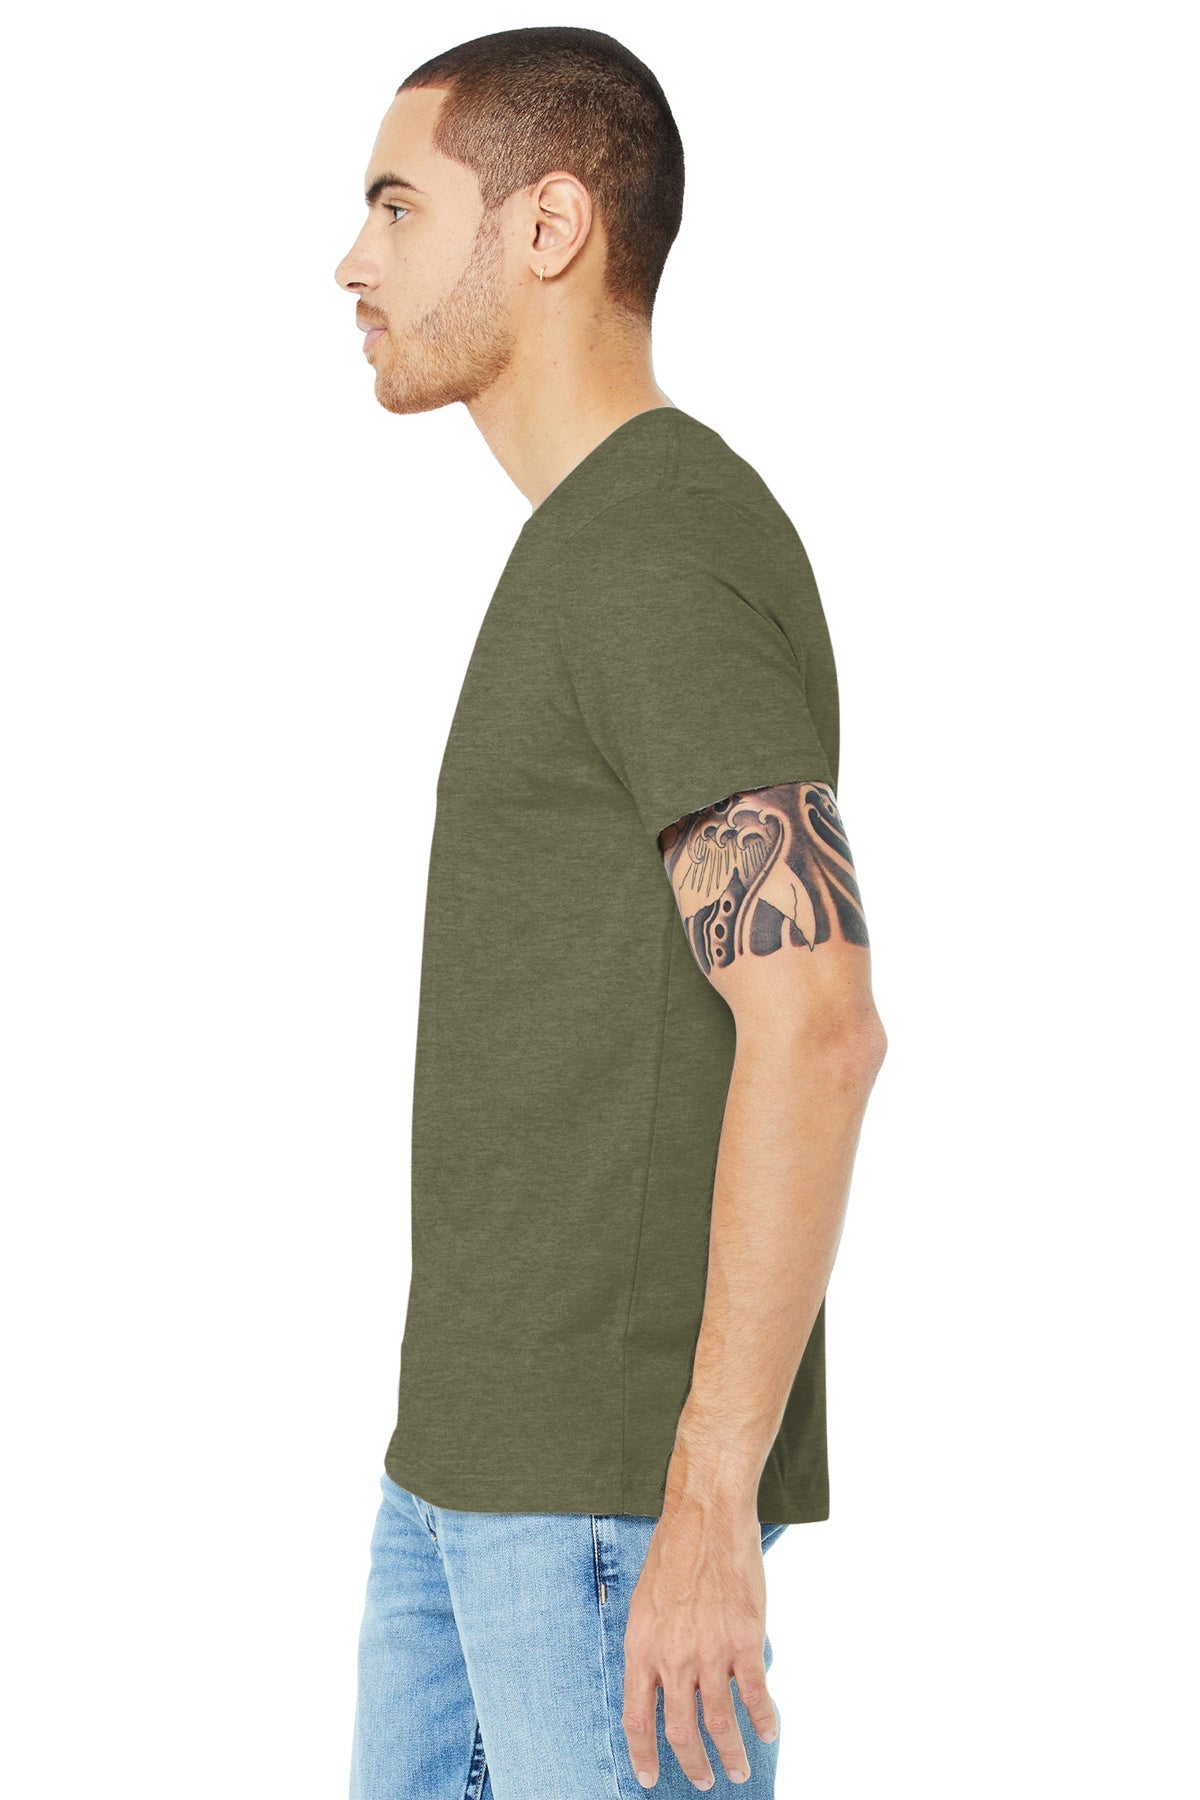 bella + canvas unisex jersey short sleeve t-shirt 3001c heather olive